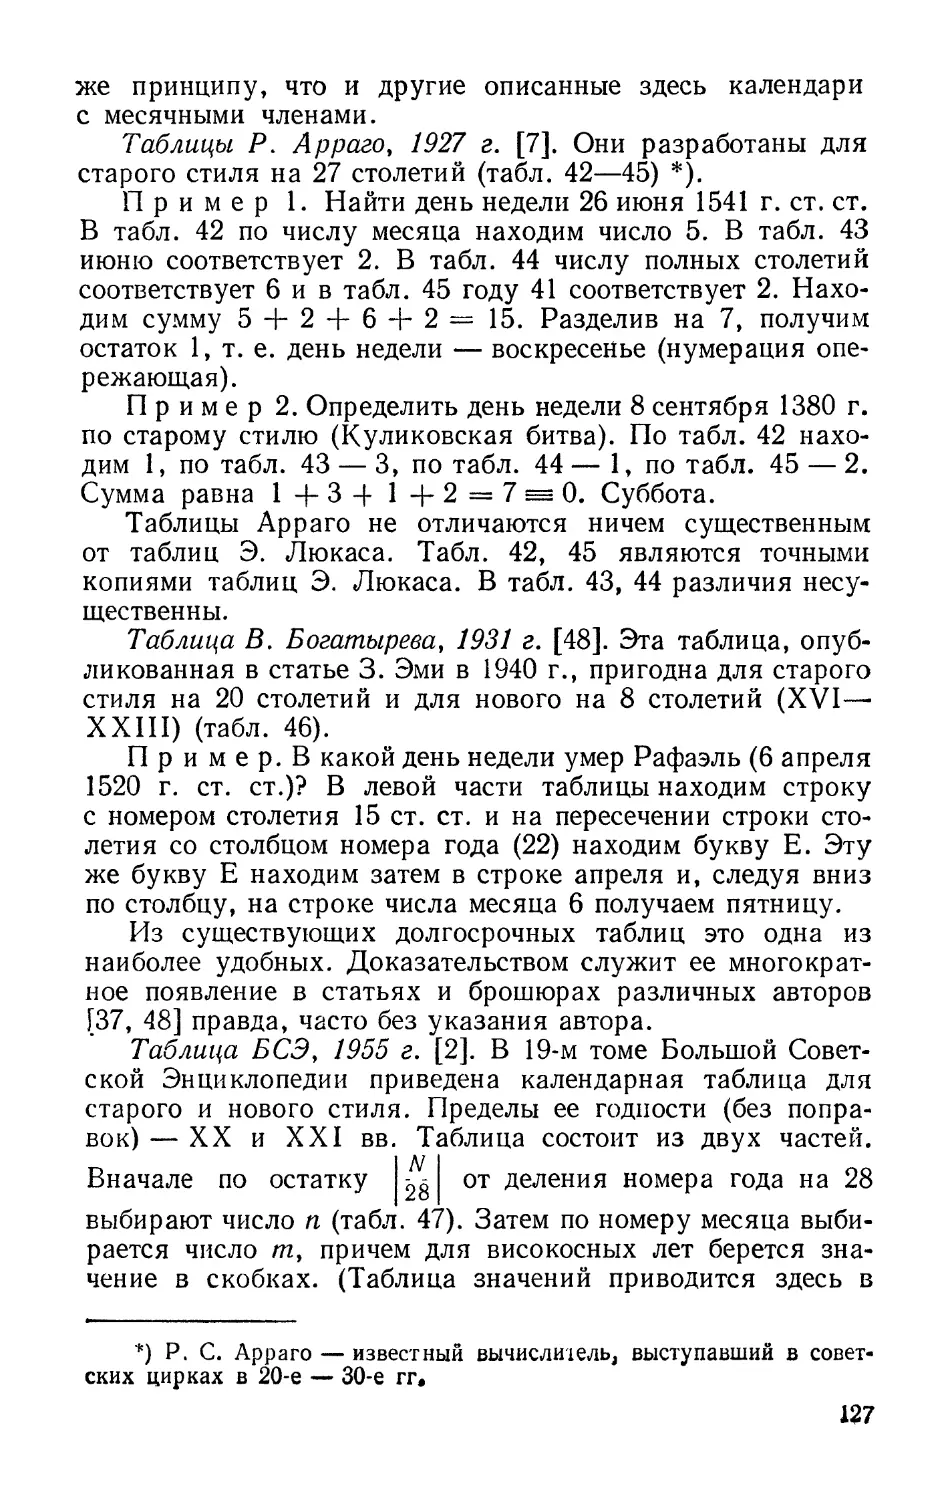 Таблицы Р. Арраго, 1927 г.
Таблица В. Богатырева, 1931 г.
Таблица БСЭ, 1955 г.